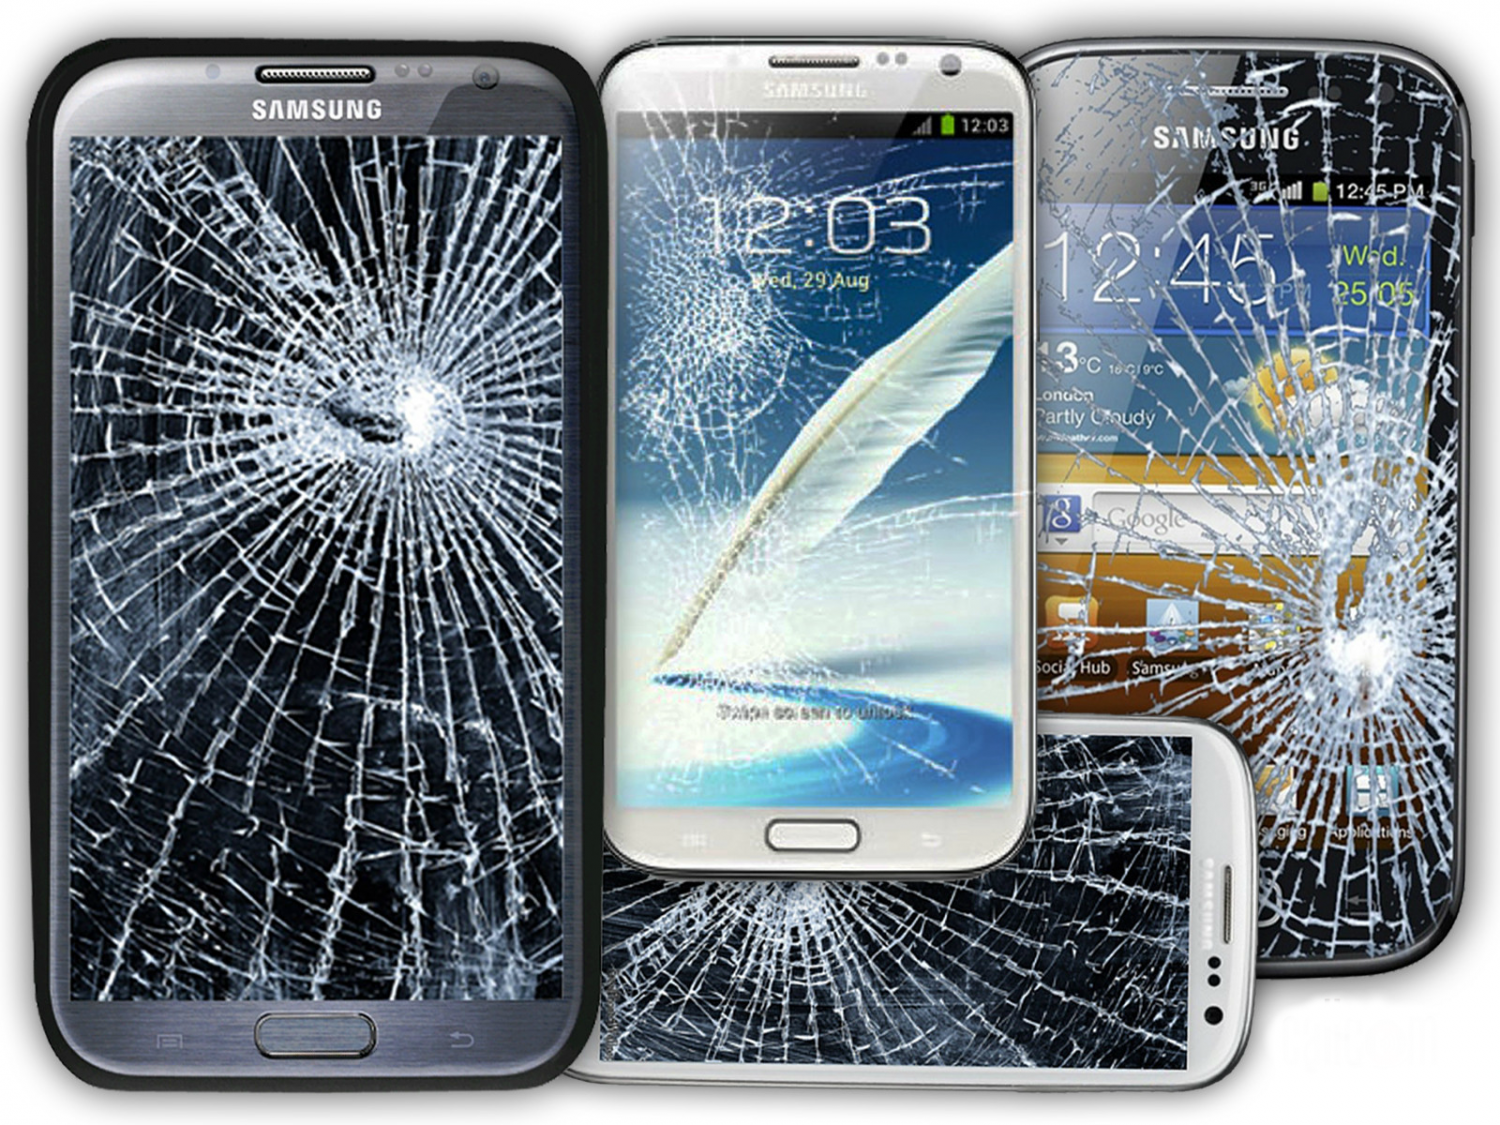 phone repair, tablet repair, iPhone, iPad, iPod